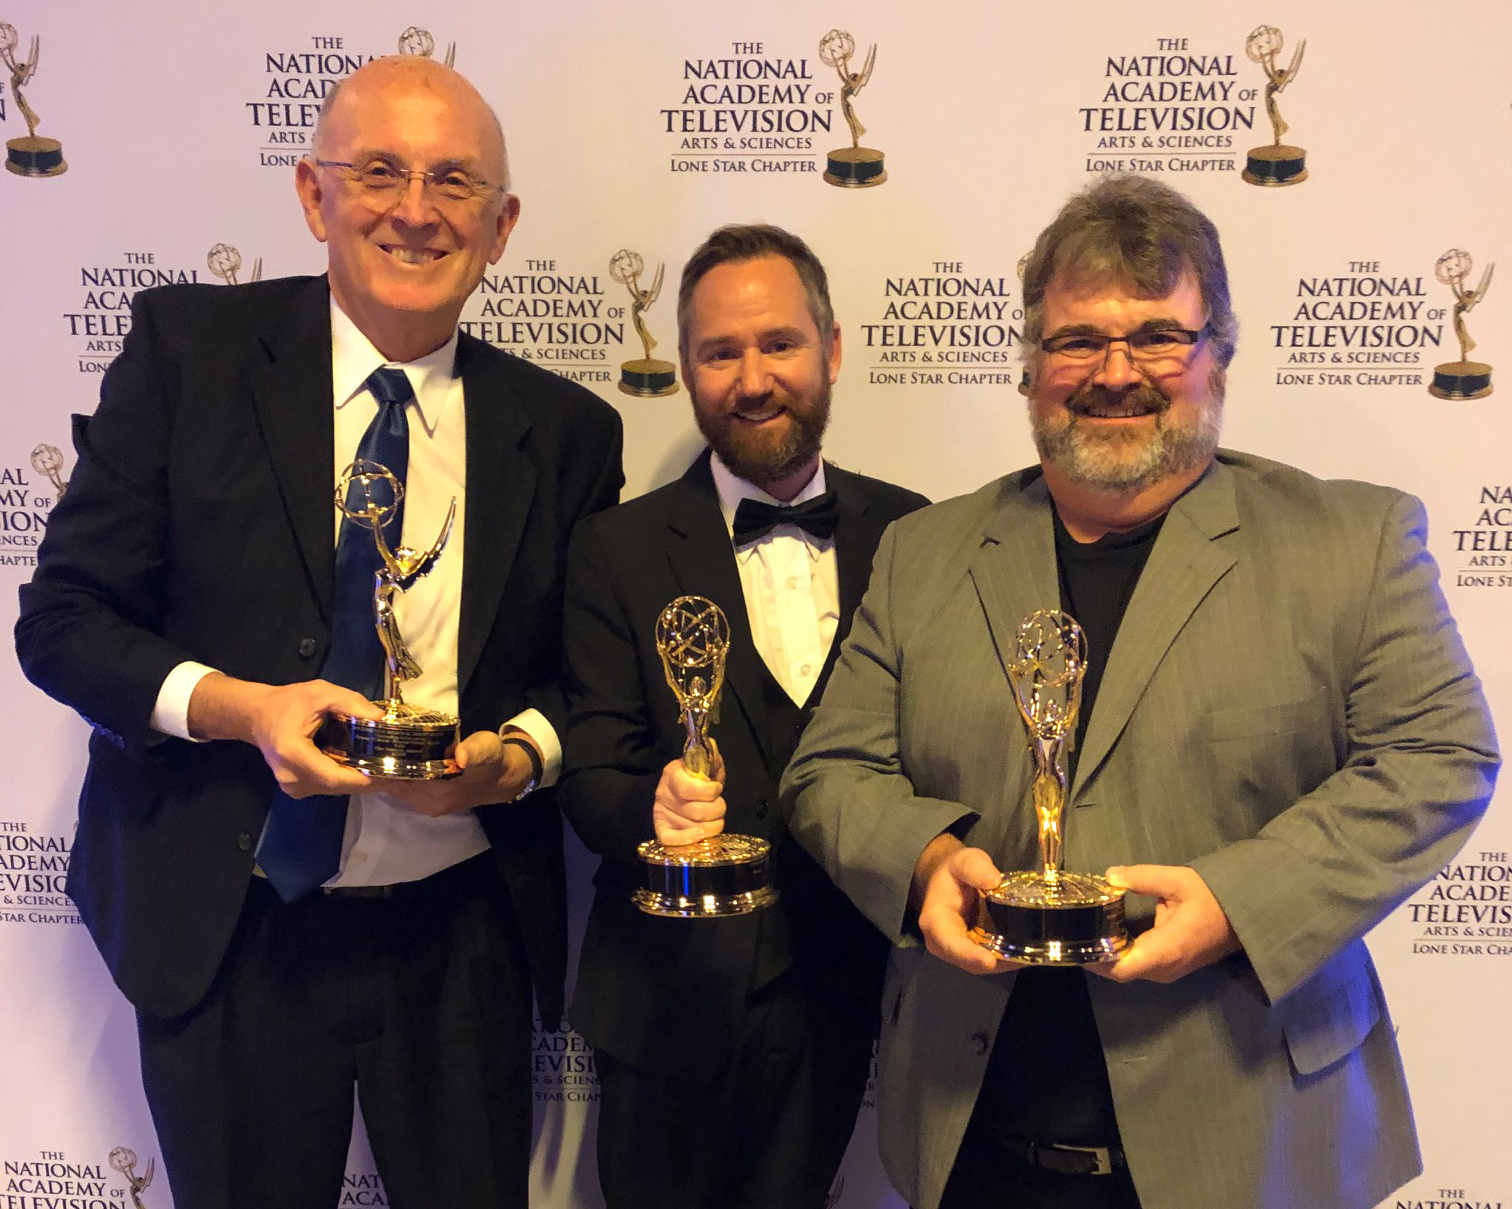 SWAU communication department receives an Emmy award on Nov. 10, 2018